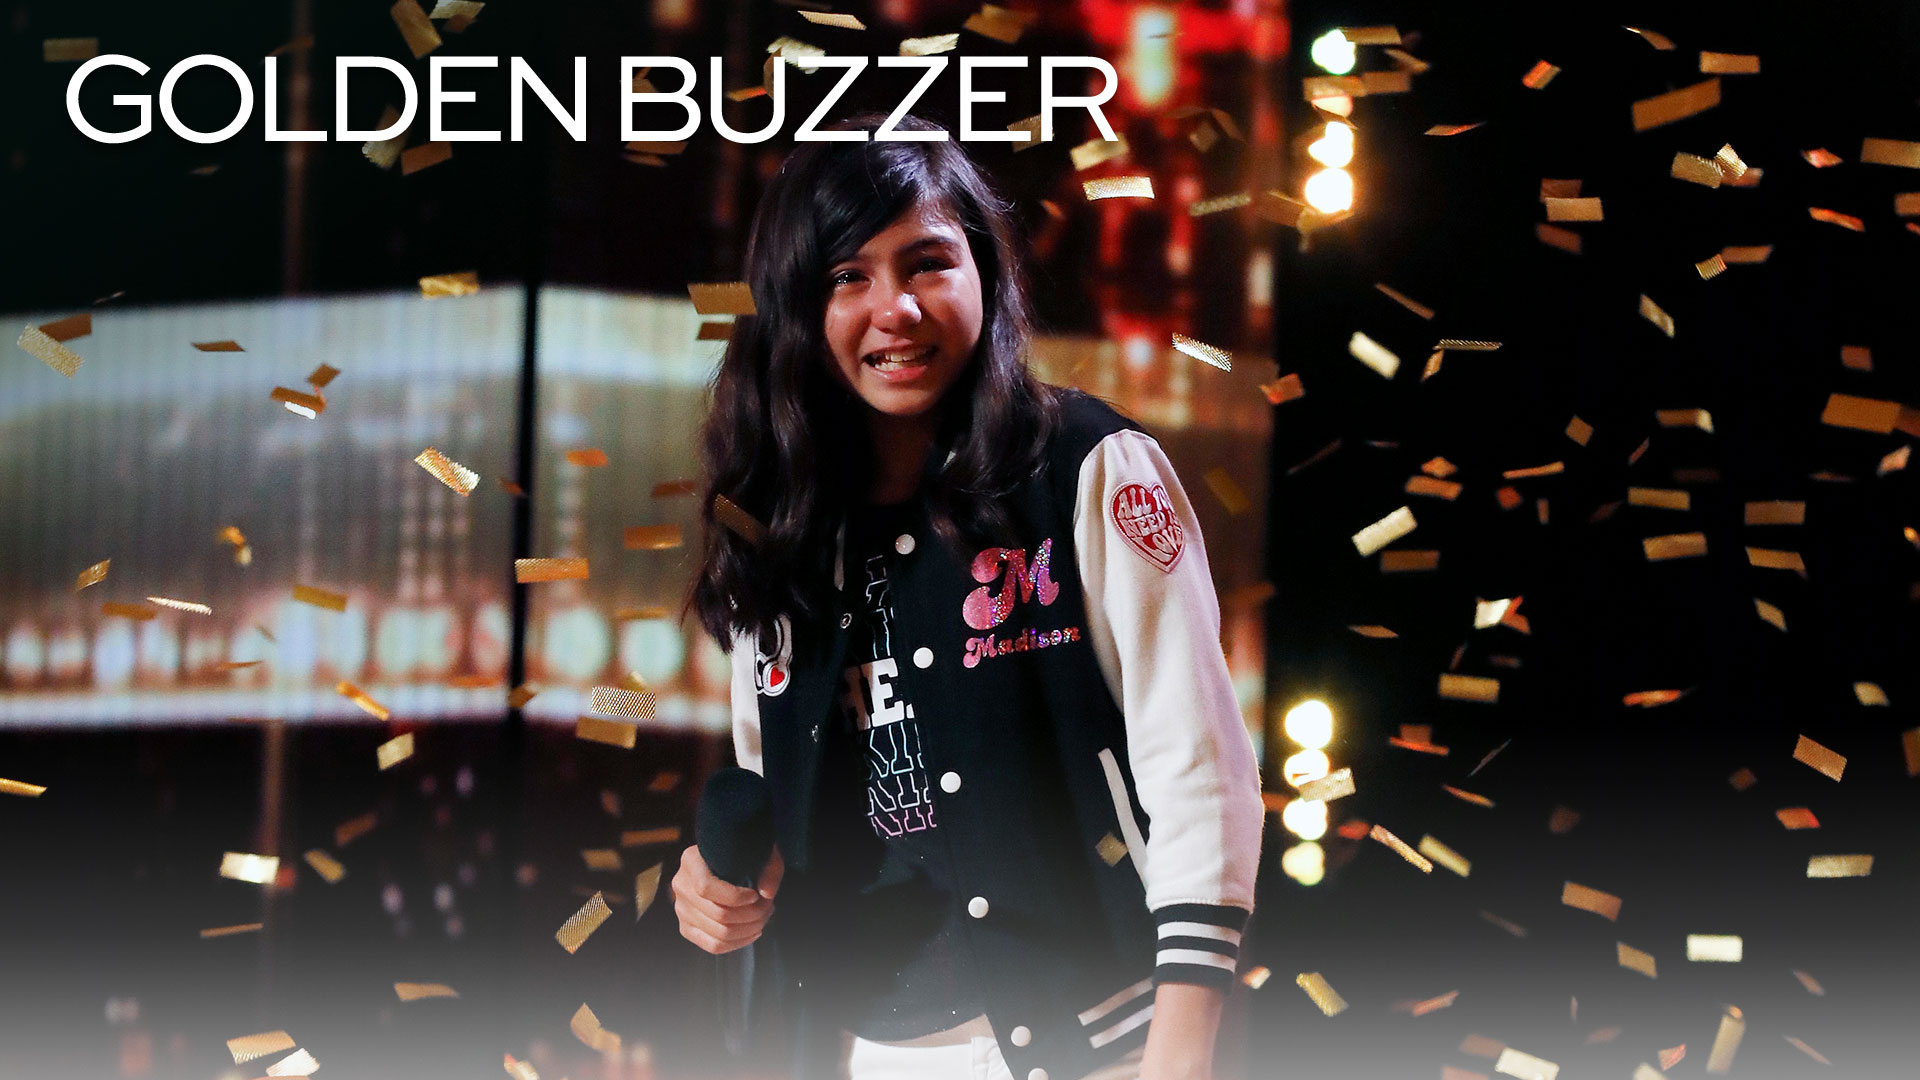 Watch America's Got Talent Highlight Golden Buzzer From the Audience